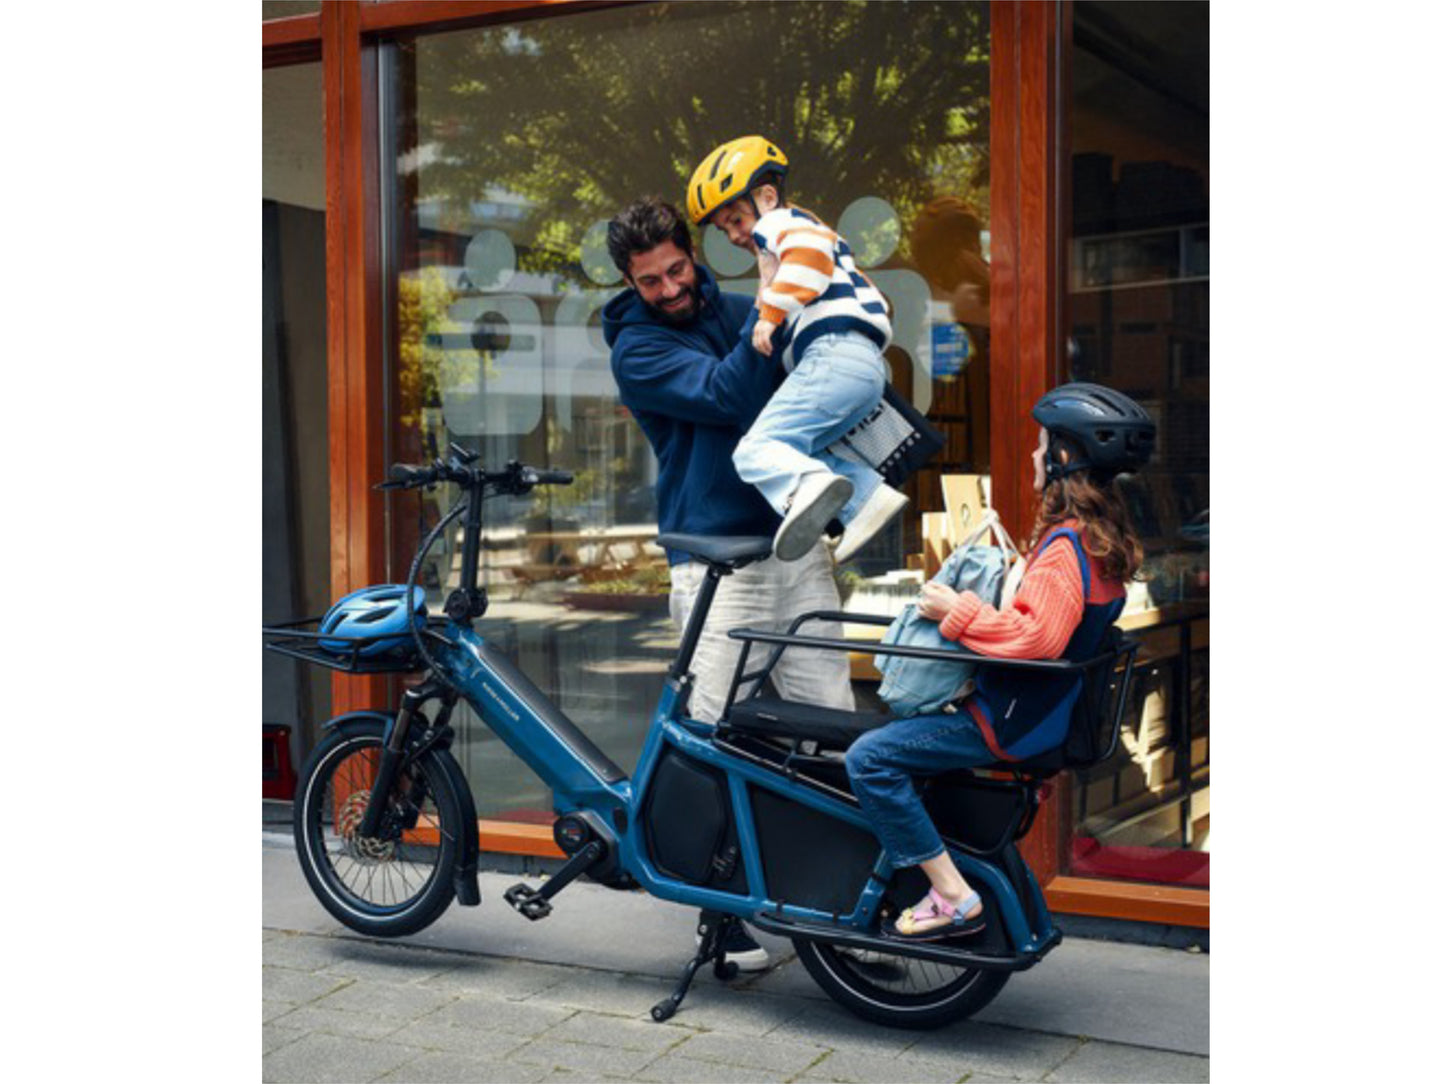 Riese & Muller Multitinker Vario eMtb hardtail man loading children on to bike in front of store